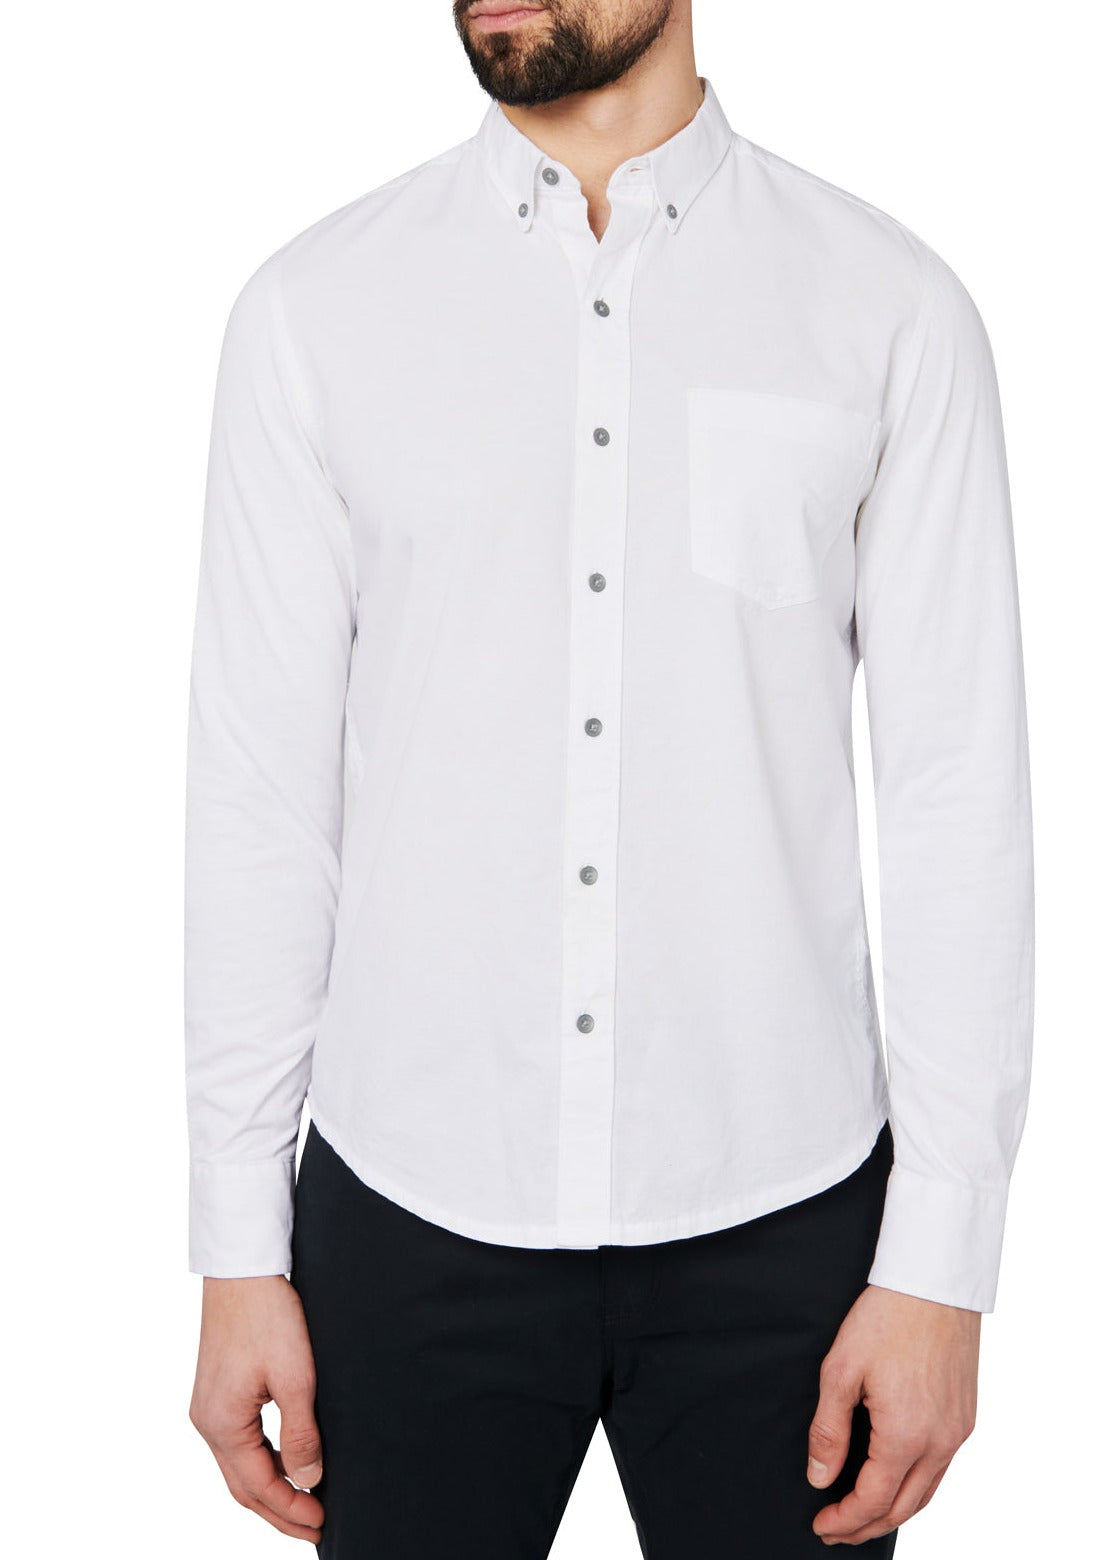 Male model wearing white button down shirt